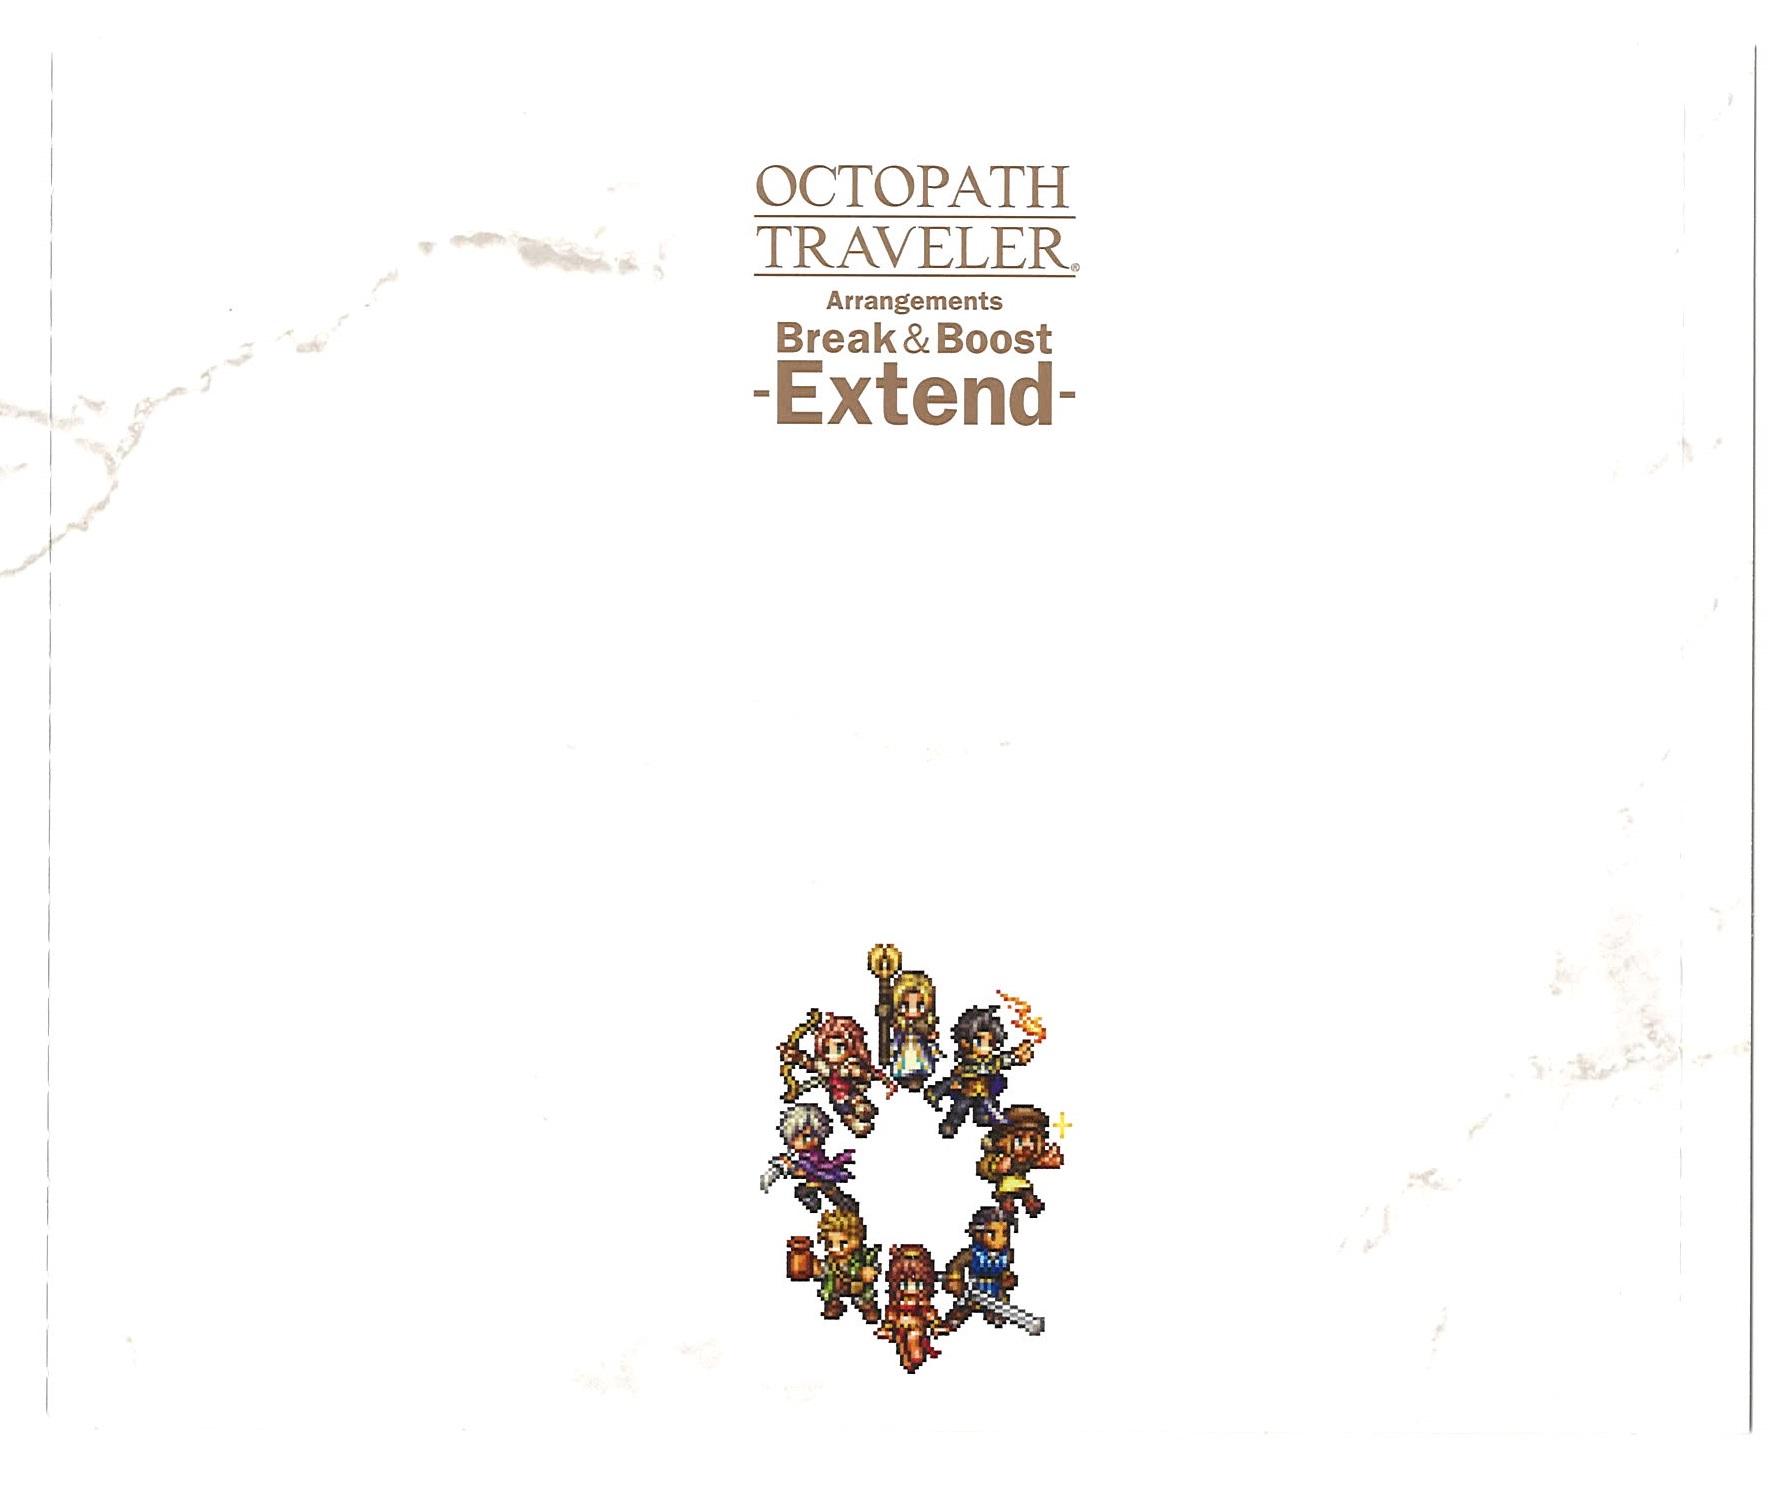 octopath traveler ost download